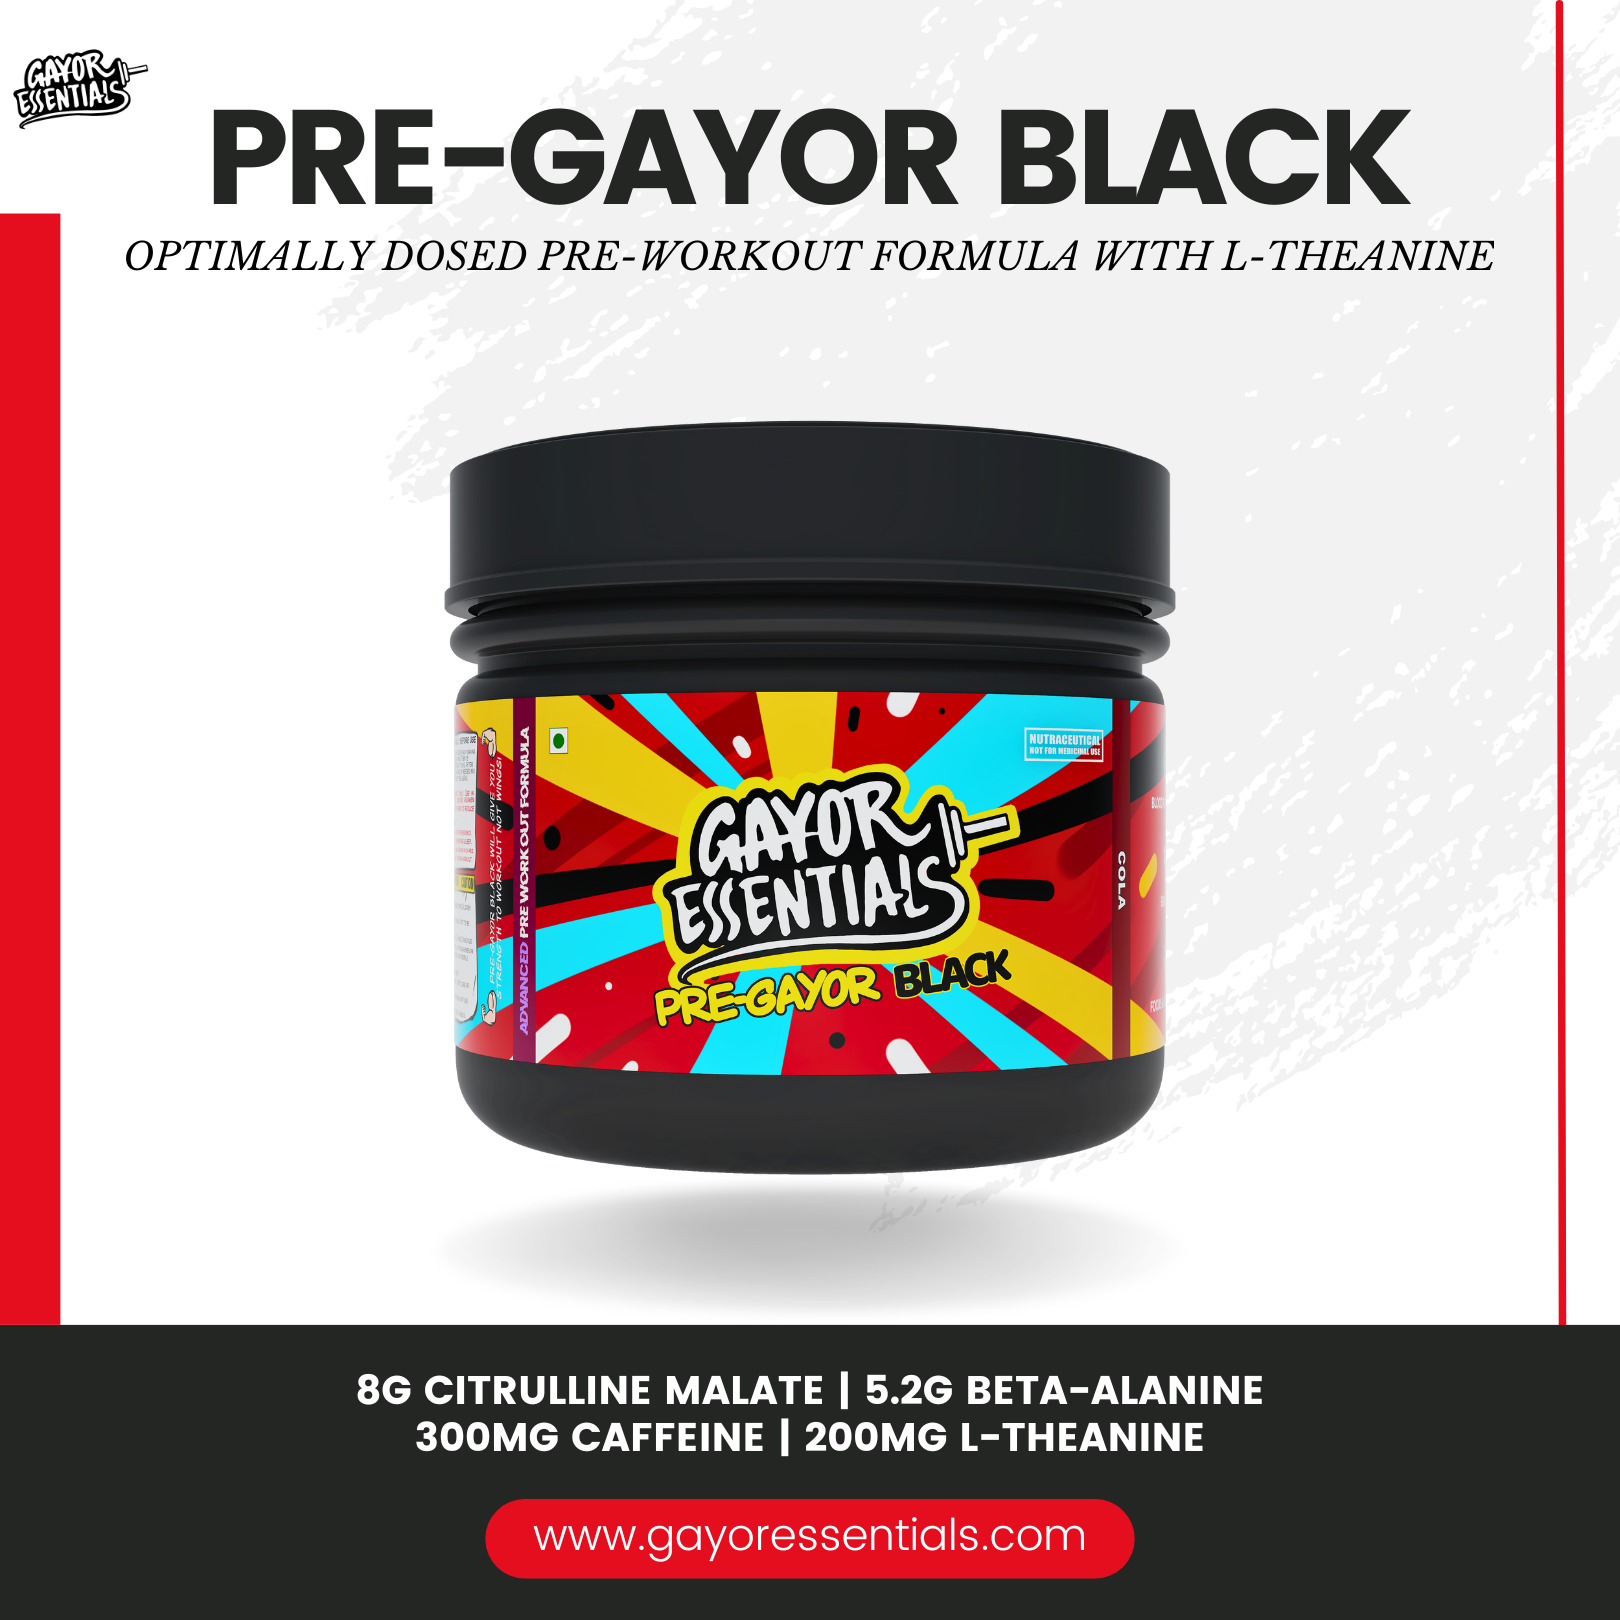 2 x Pre Gayor Black (properly dosed) + Lifting Gear Bundle